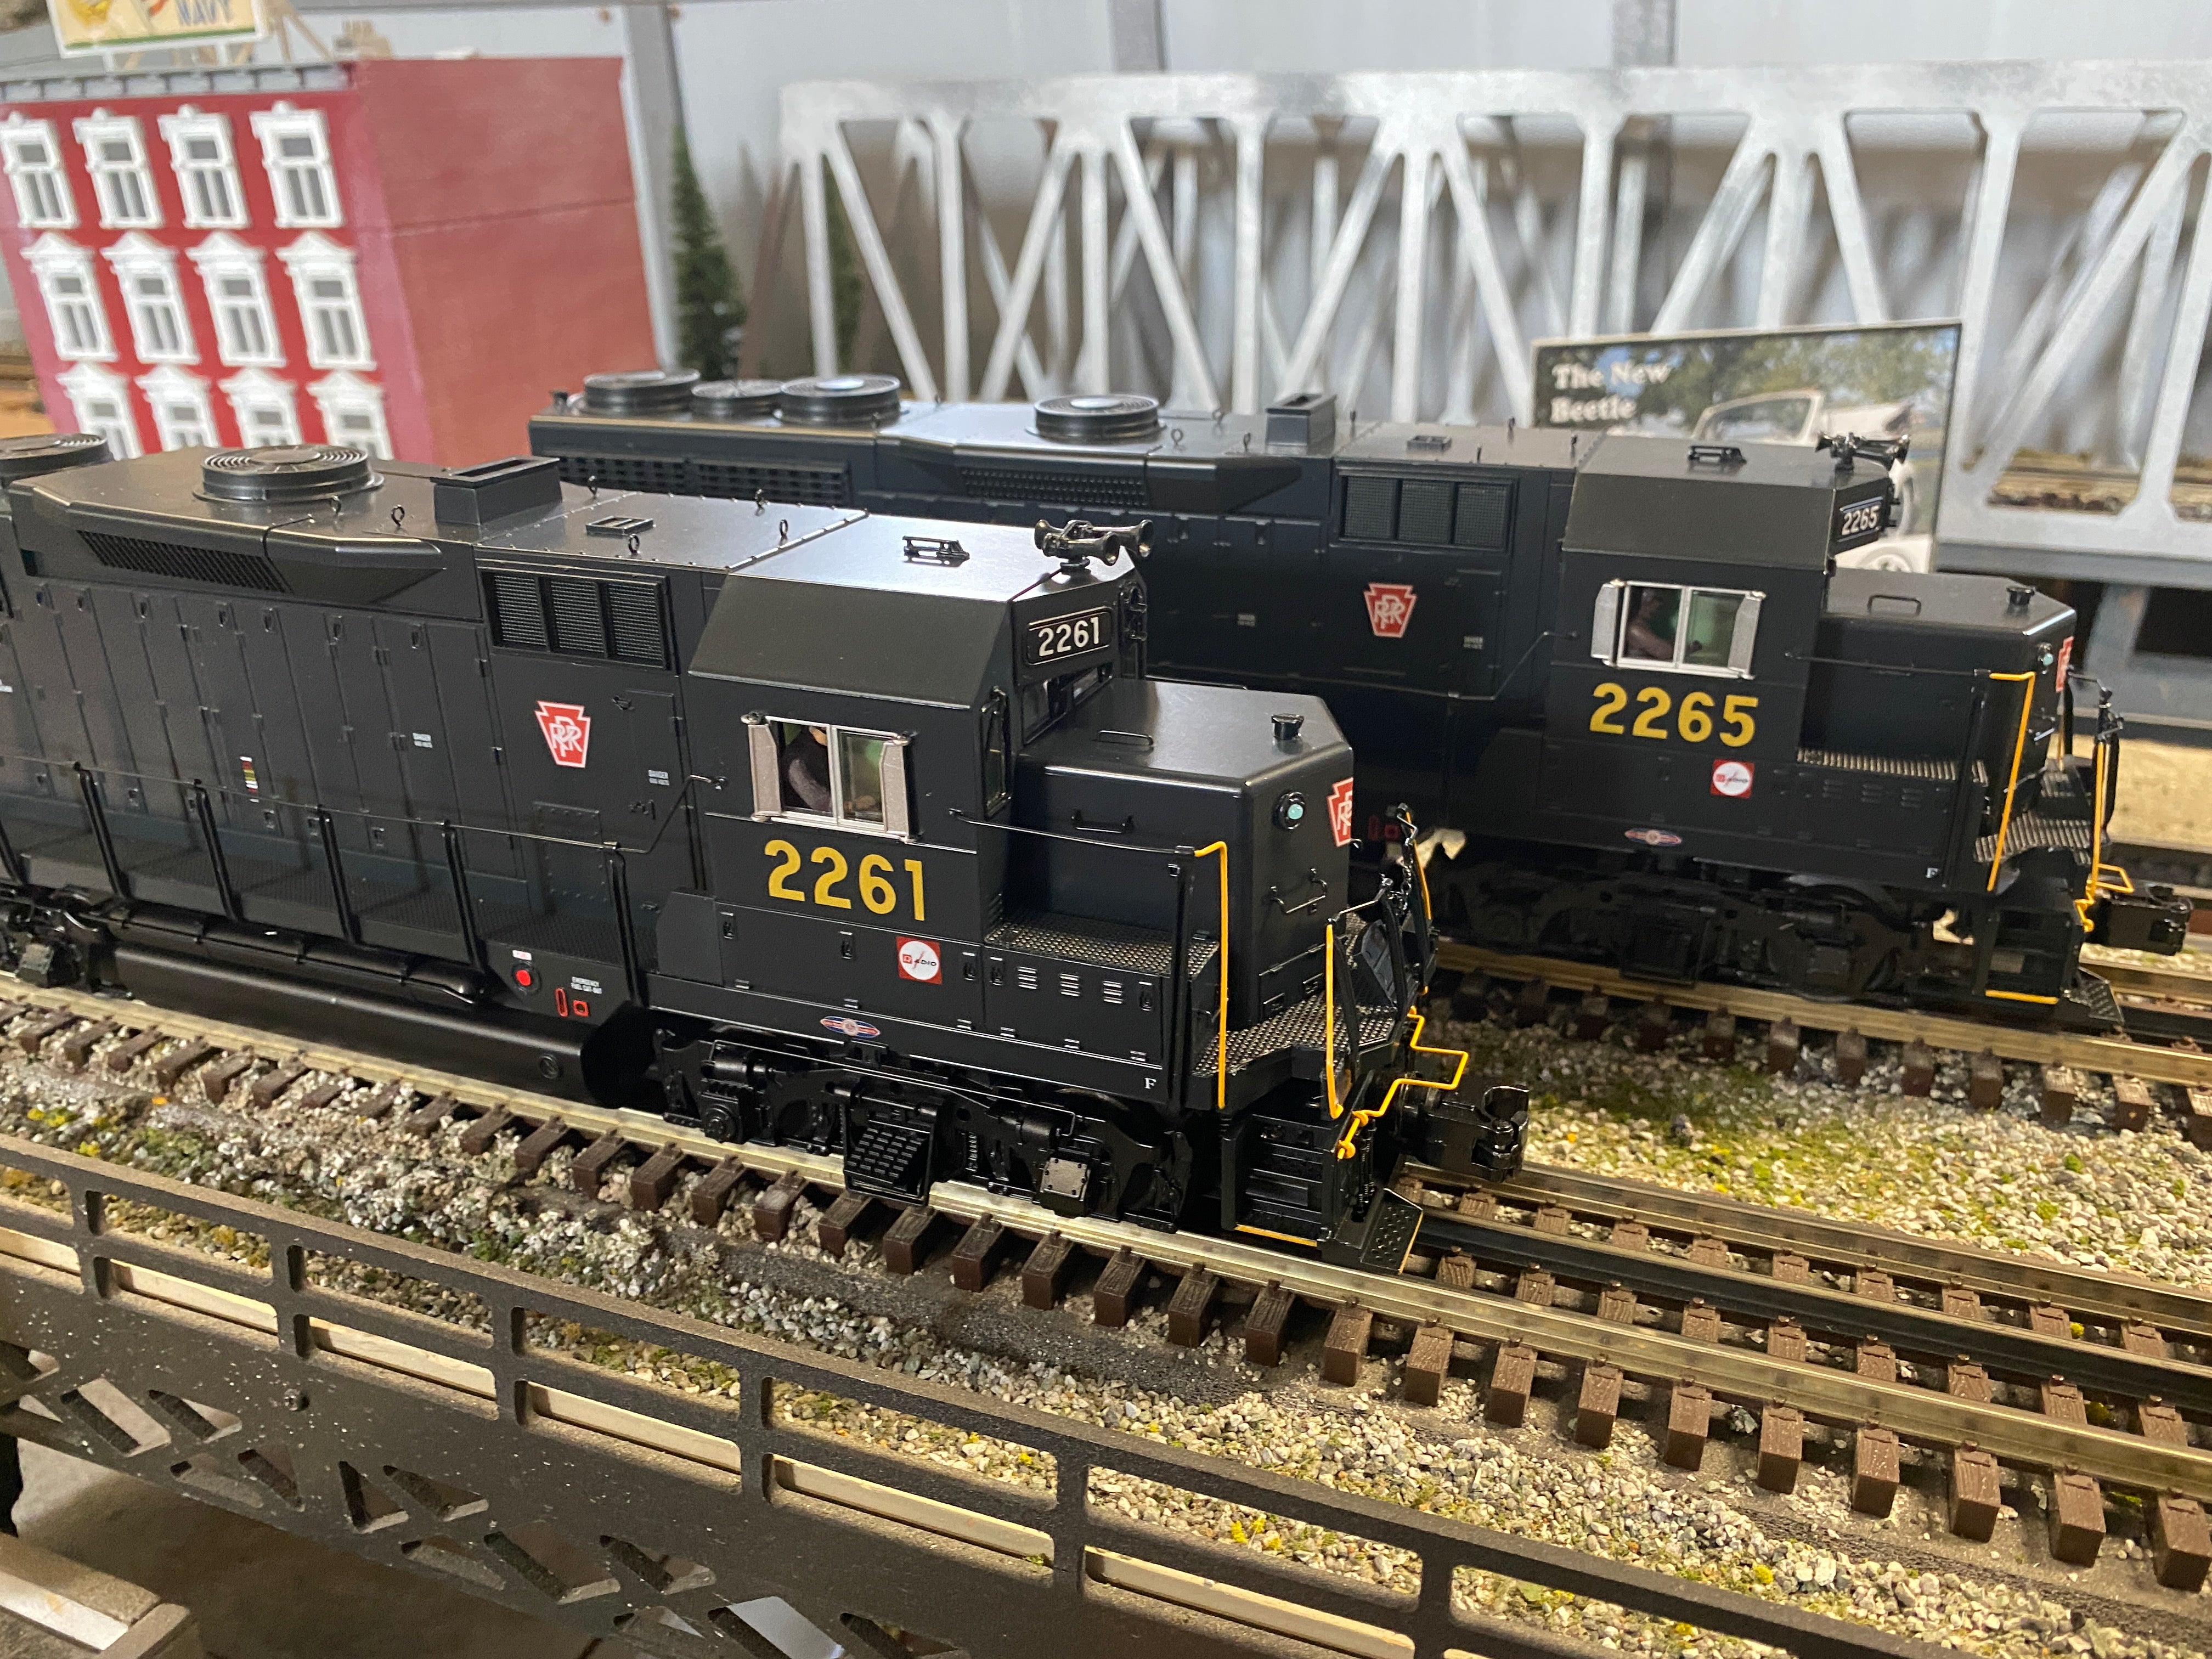 MTH 20-21556-1 - GP-35 Diesel Engine "Pennsylvania" #2261 w/ PS3